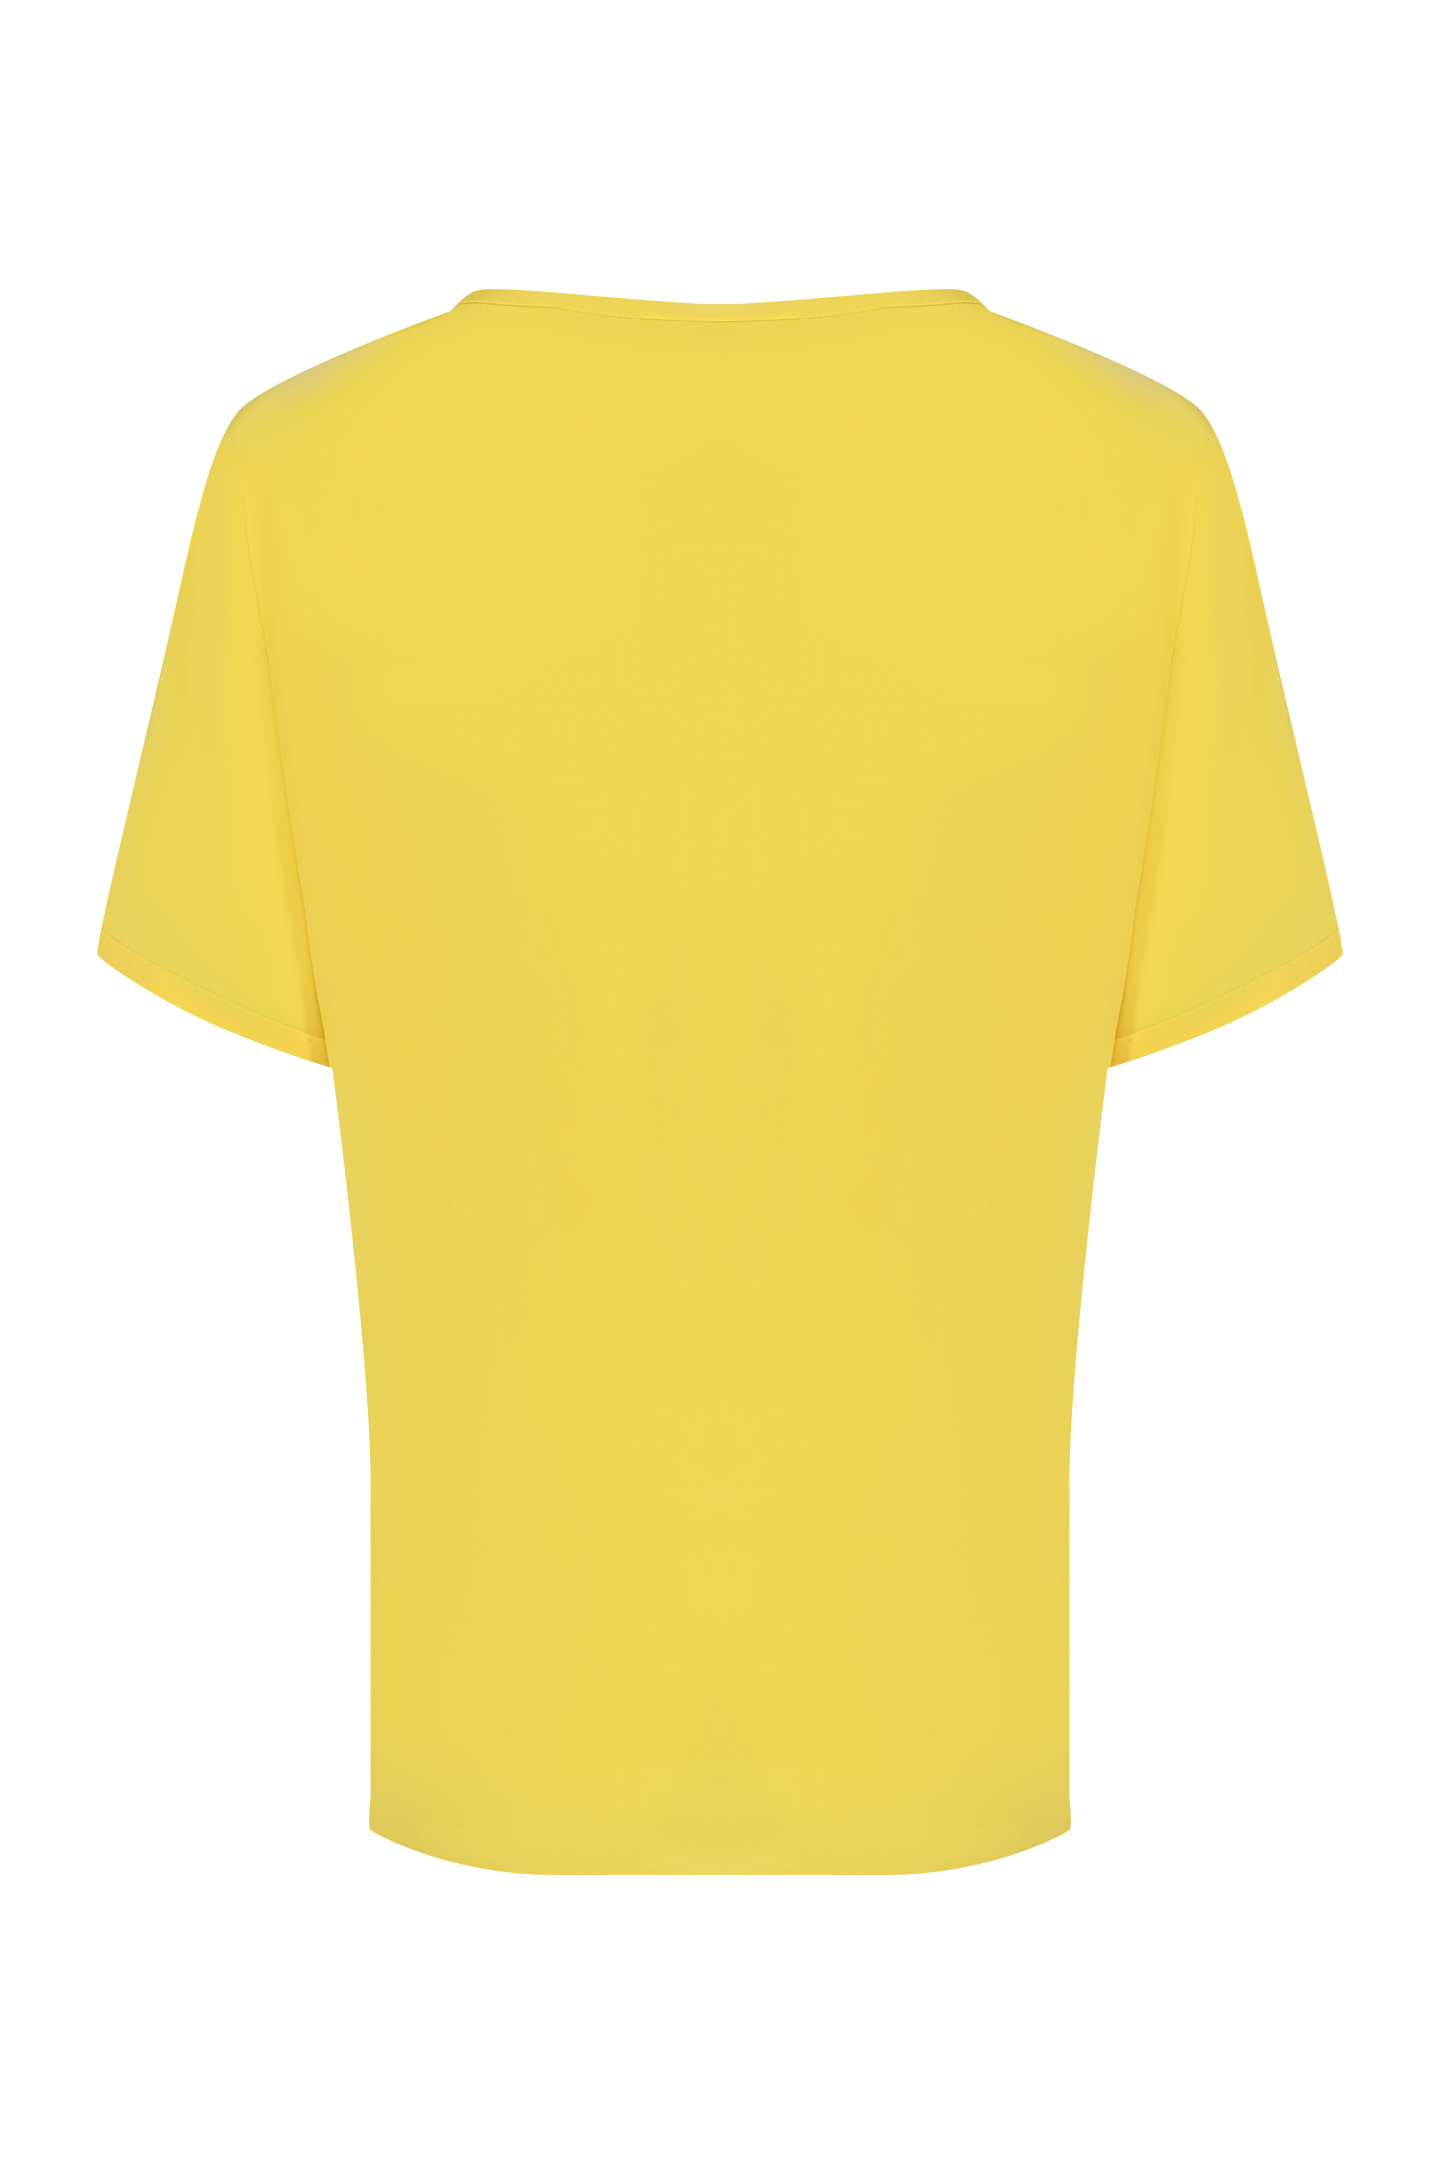 Футболка KITON D55401K0597A0, цвет: Желтый, Женский